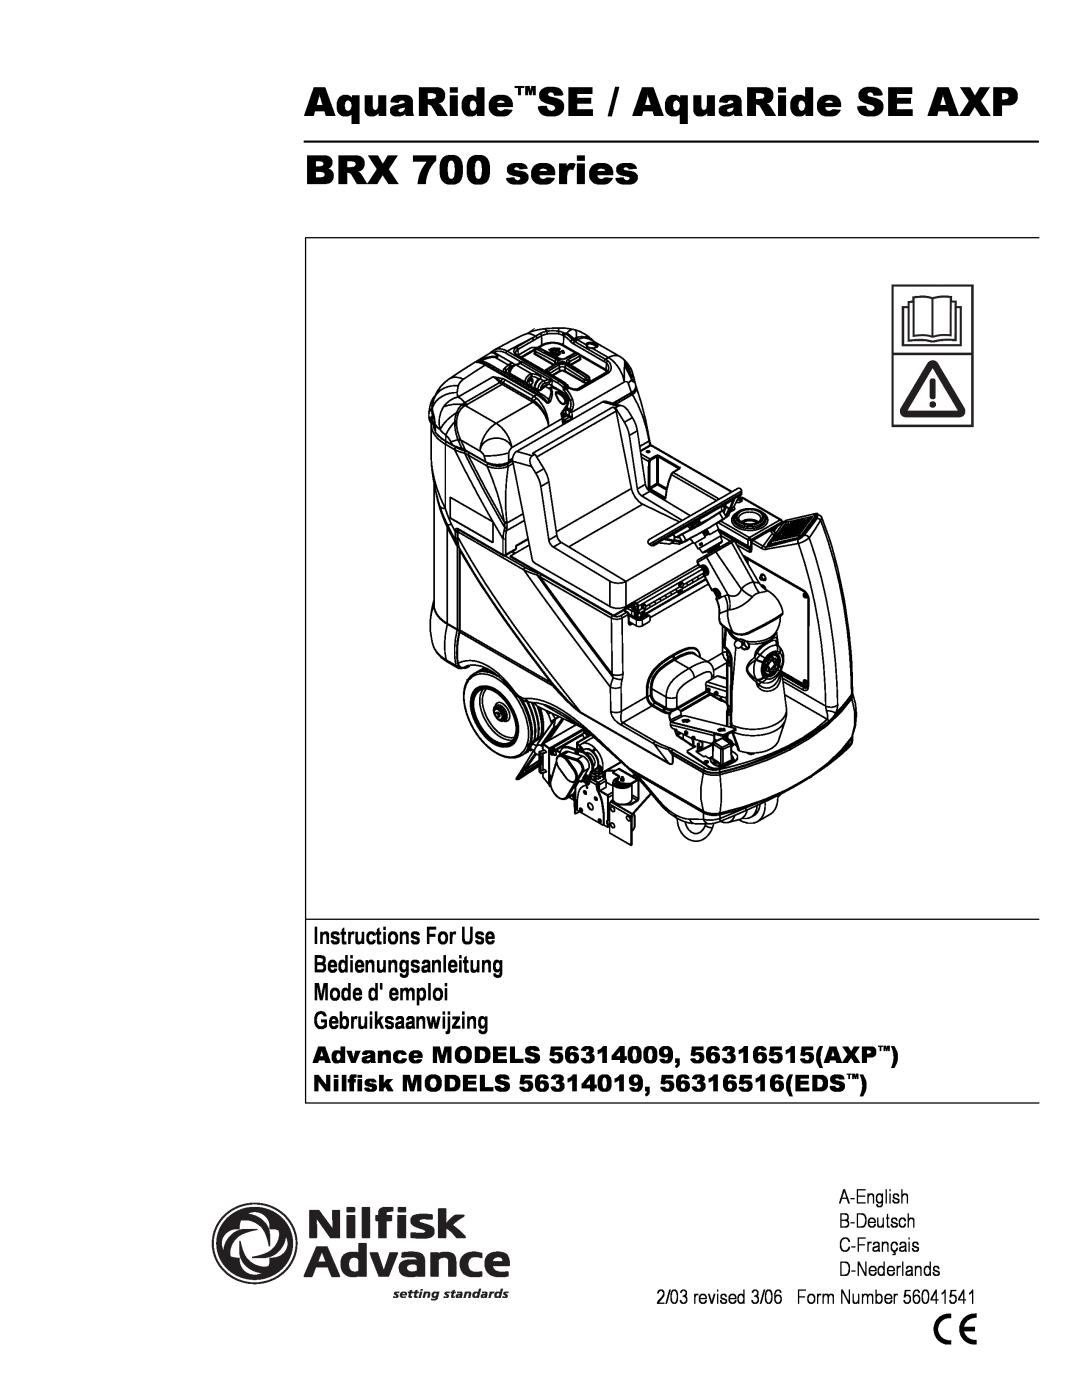 Nilfisk-Advance America BRX 700 Series manual Instructions For Use, Bedienungsanleitung, Mode d emploi, Gebruiksaanwijzing 